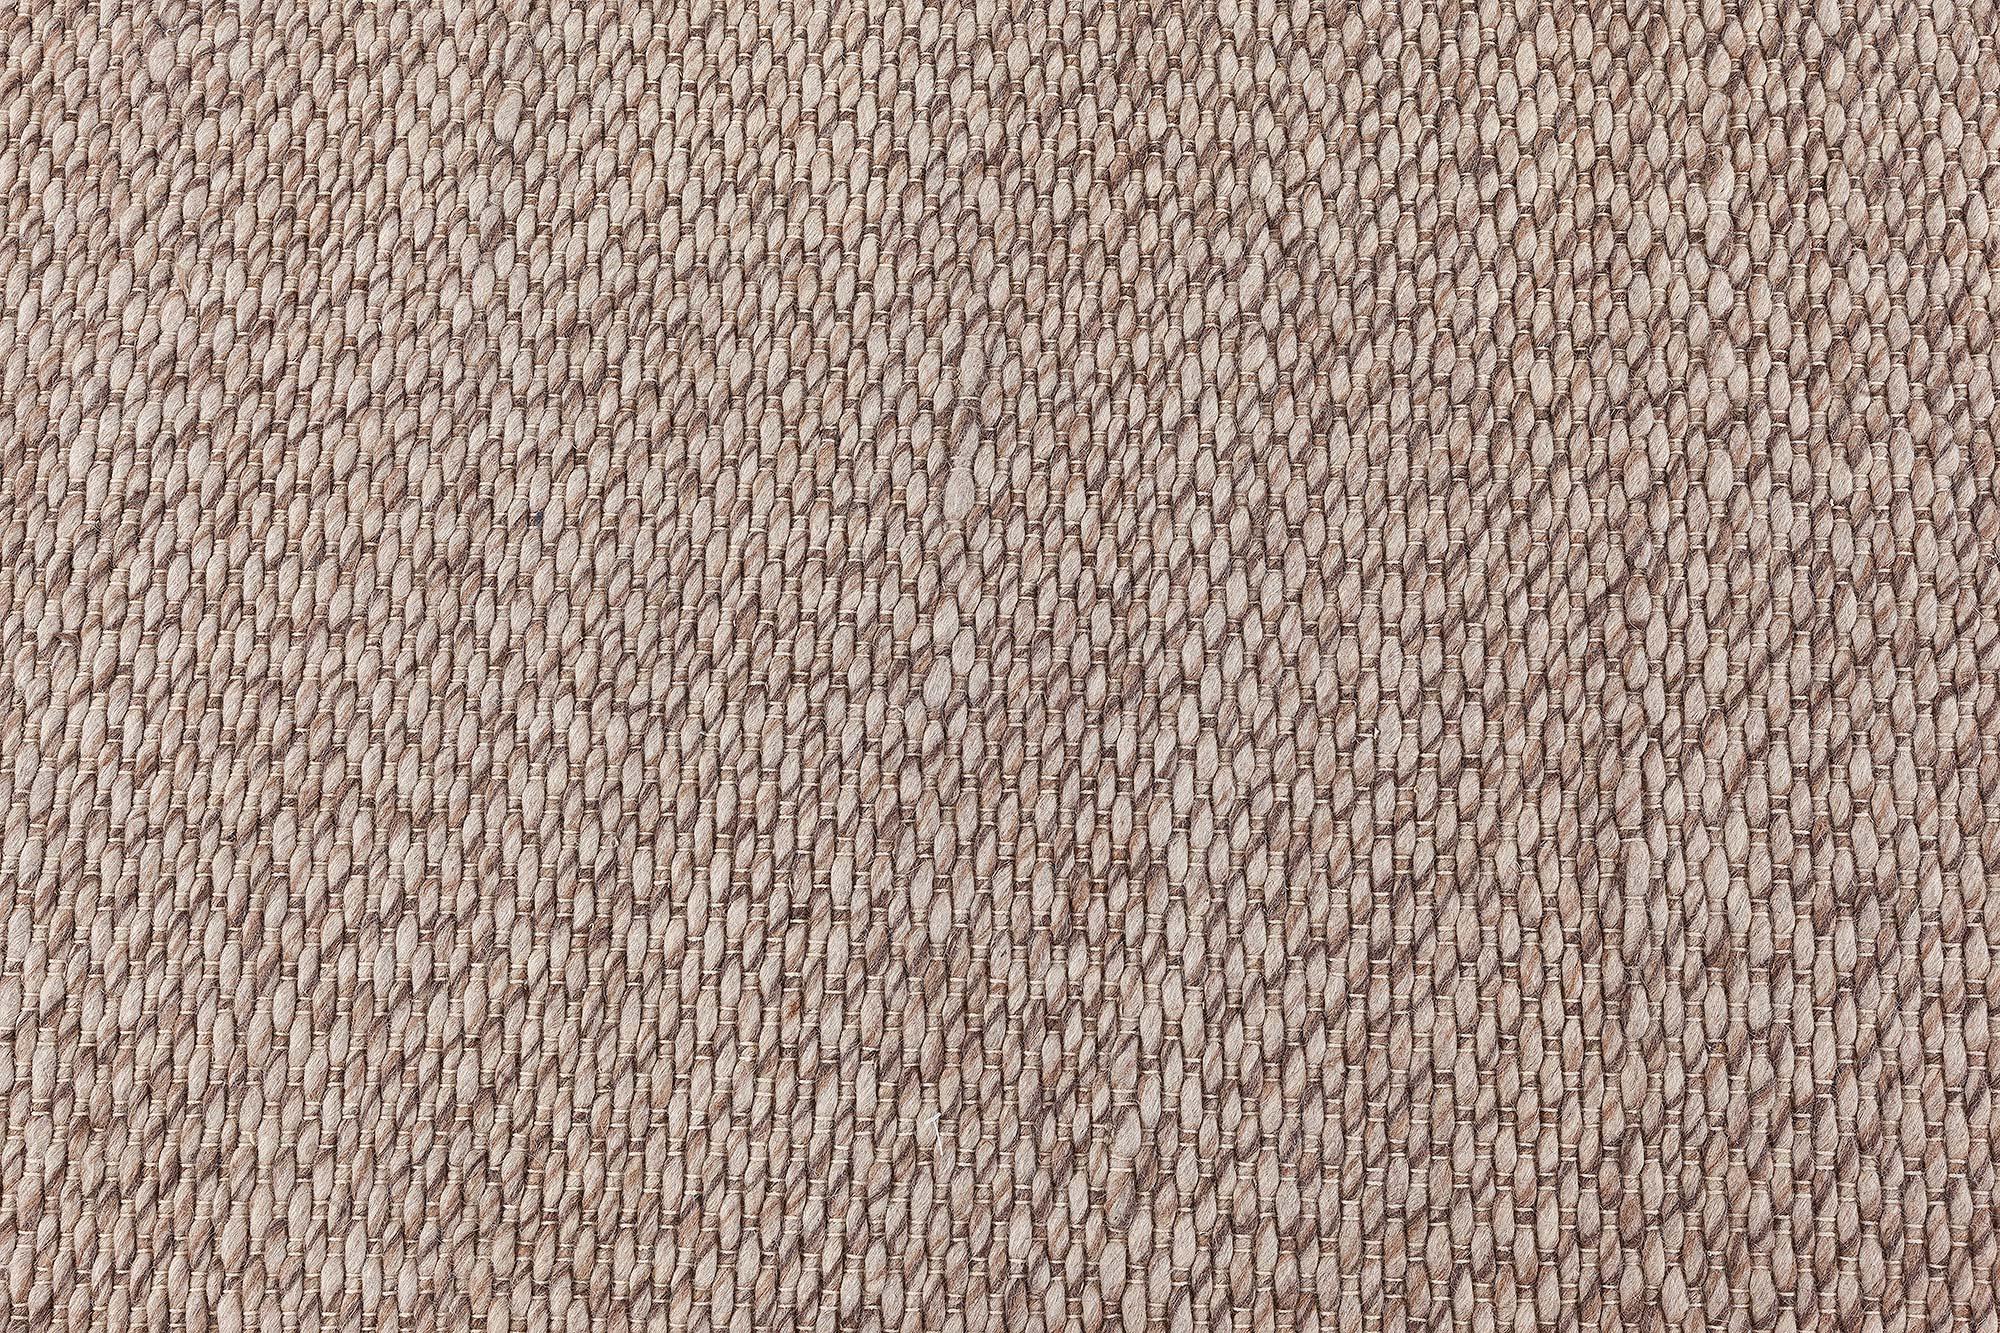 Contemporary Brown Handmade Wool Runner by Doris Leslie Blau.
Size: 3'7